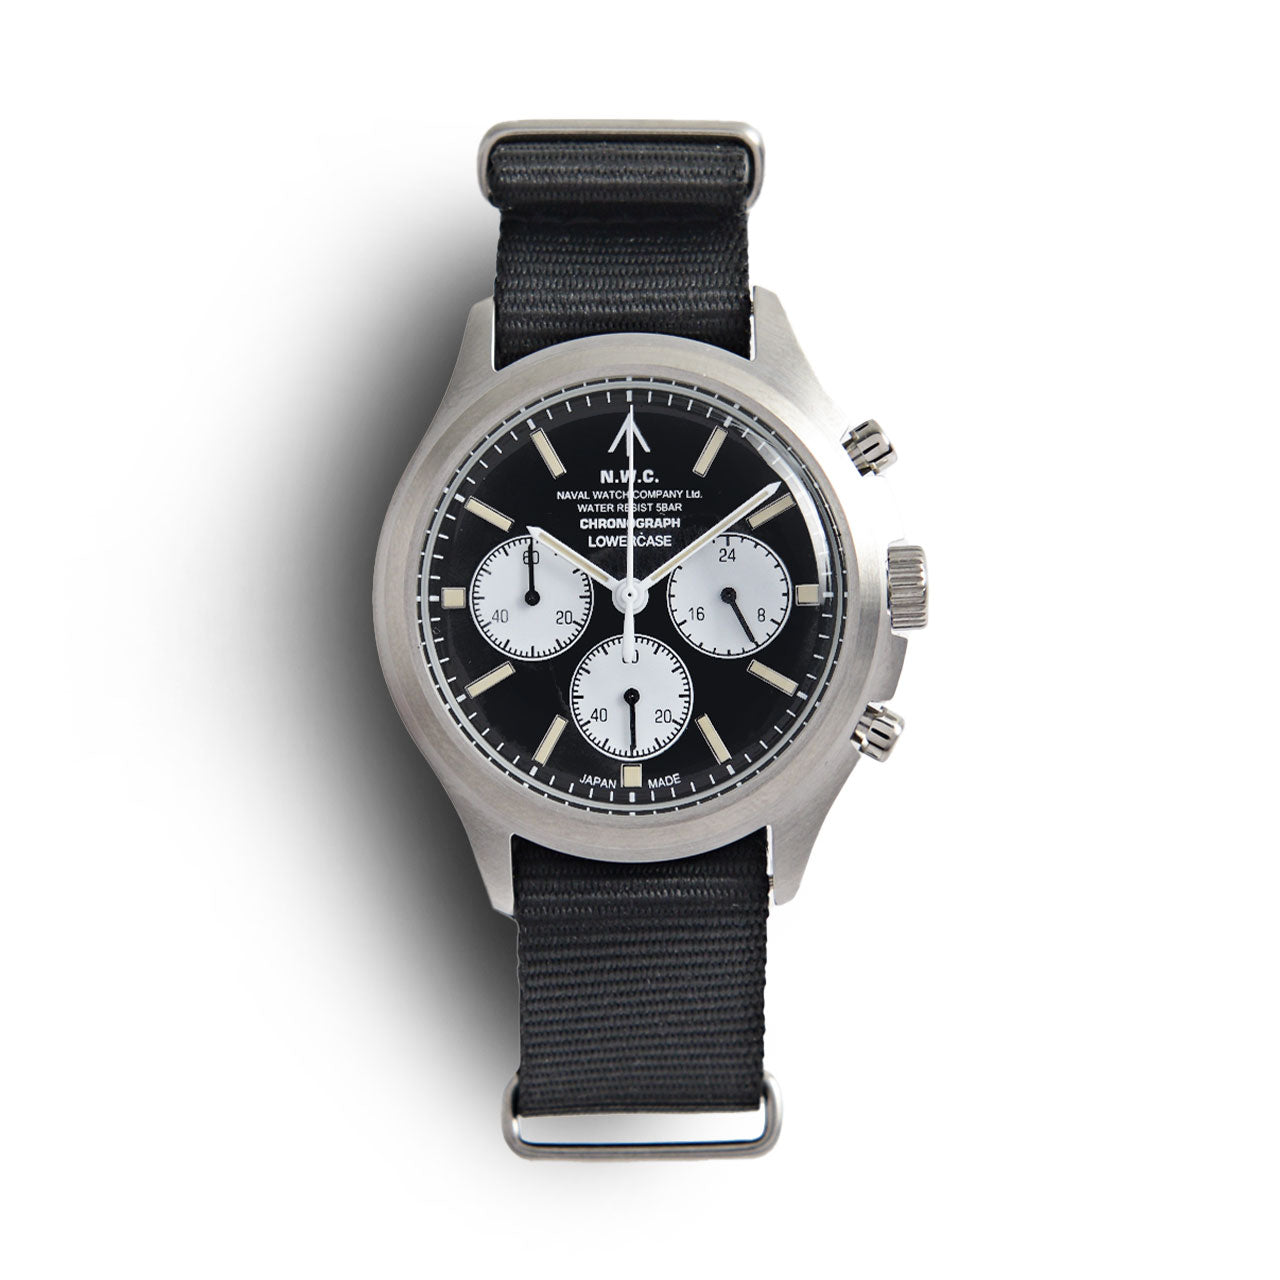 Naval Watch Co. FRXC001 Chronograph Watch